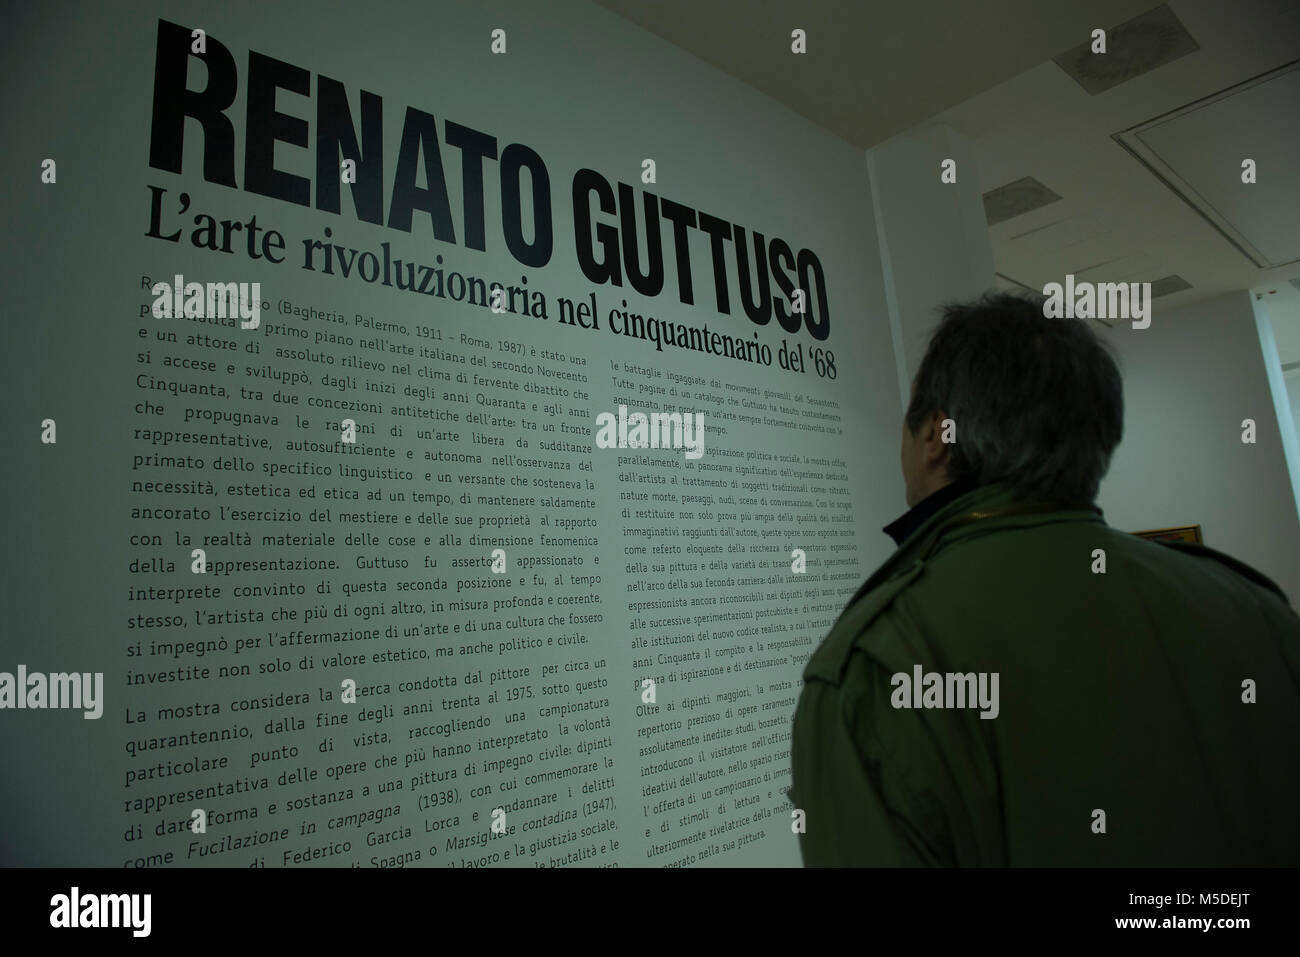 Turin, Piedmont, Italy. 22nd Feb, 2018. Turin, Italy-February 22, 2018: Renato Guttuso art exhibition at the GAM in Turin Credit: Stefano Guidi/ZUMA Wire/Alamy Live News Stock Photo